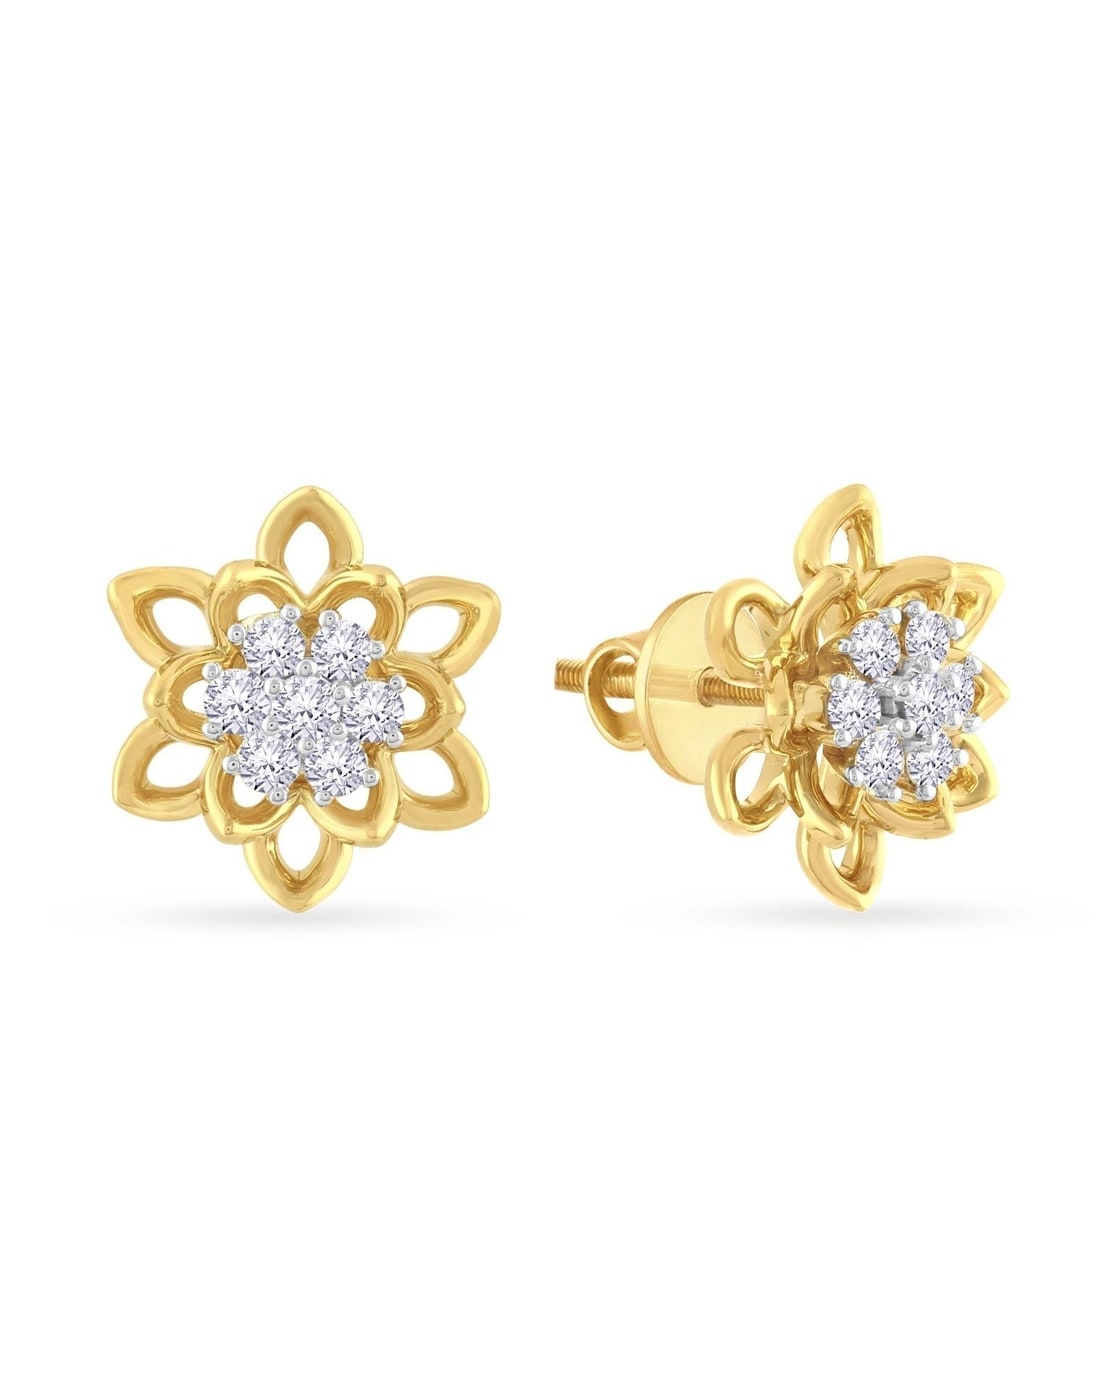 Malabar Gold and Diamonds 22k (916) Yellow Gold Stud Earrings for Women :  Amazon.in: Jewellery